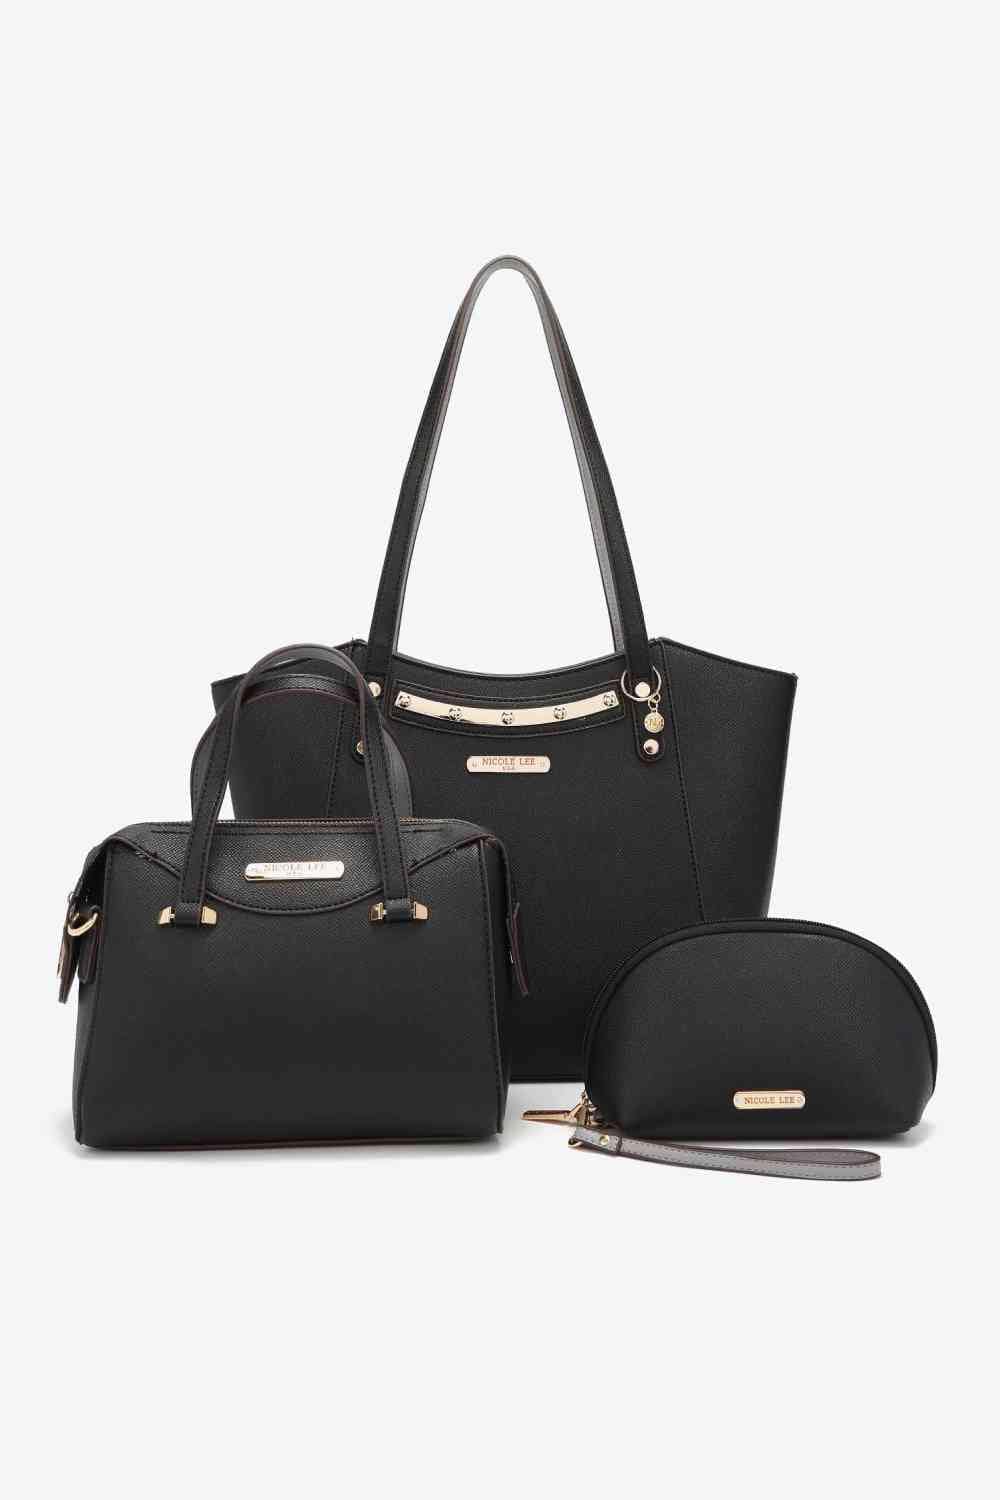 Nicole Lee USA At My Best Handbag 3-Piece Set Black / One Size